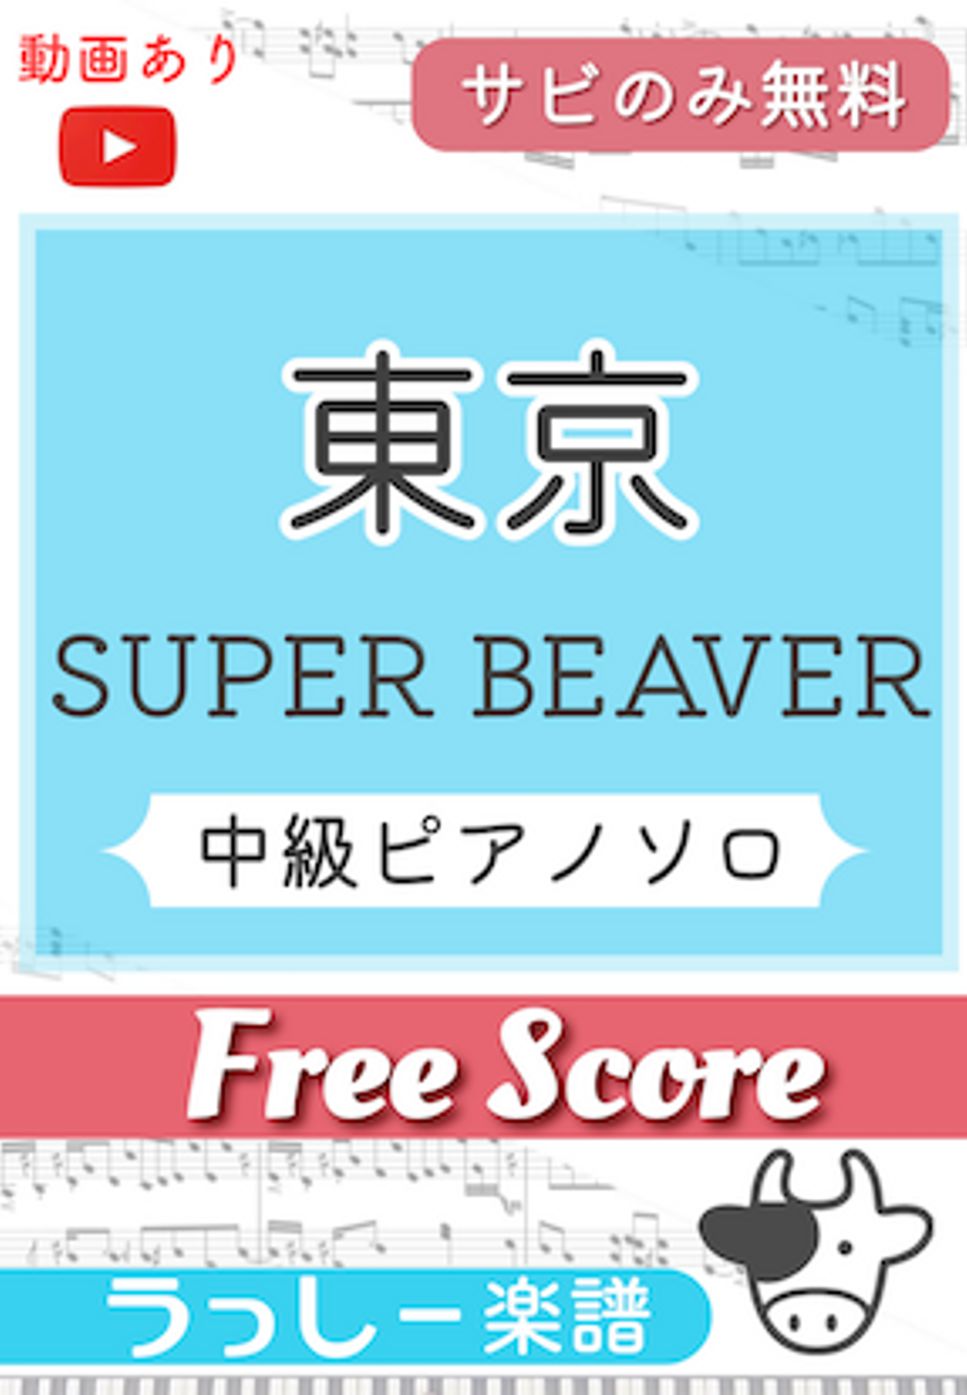 SUPER BEAVER - 東京 (サビのみ無料) by 牛武奏人